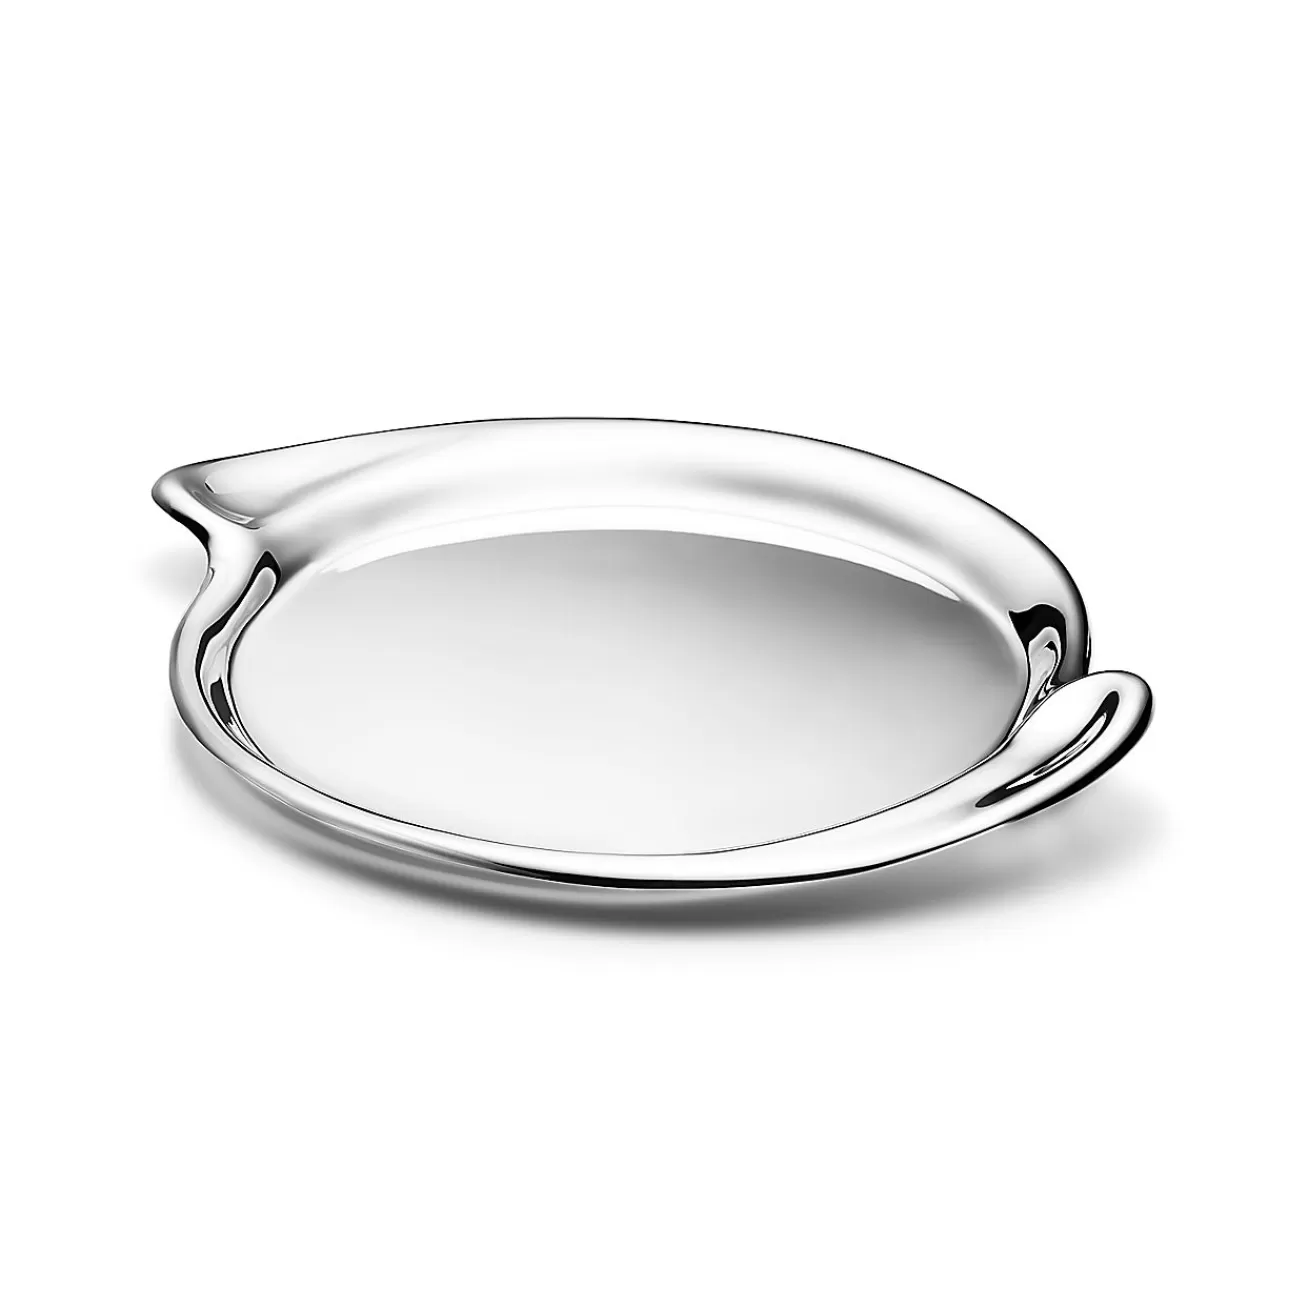 Tiffany & Co. Elsa Peretti® Thumbprint service plate in sterling silver. | ^ Tableware | Elsa Peretti Home